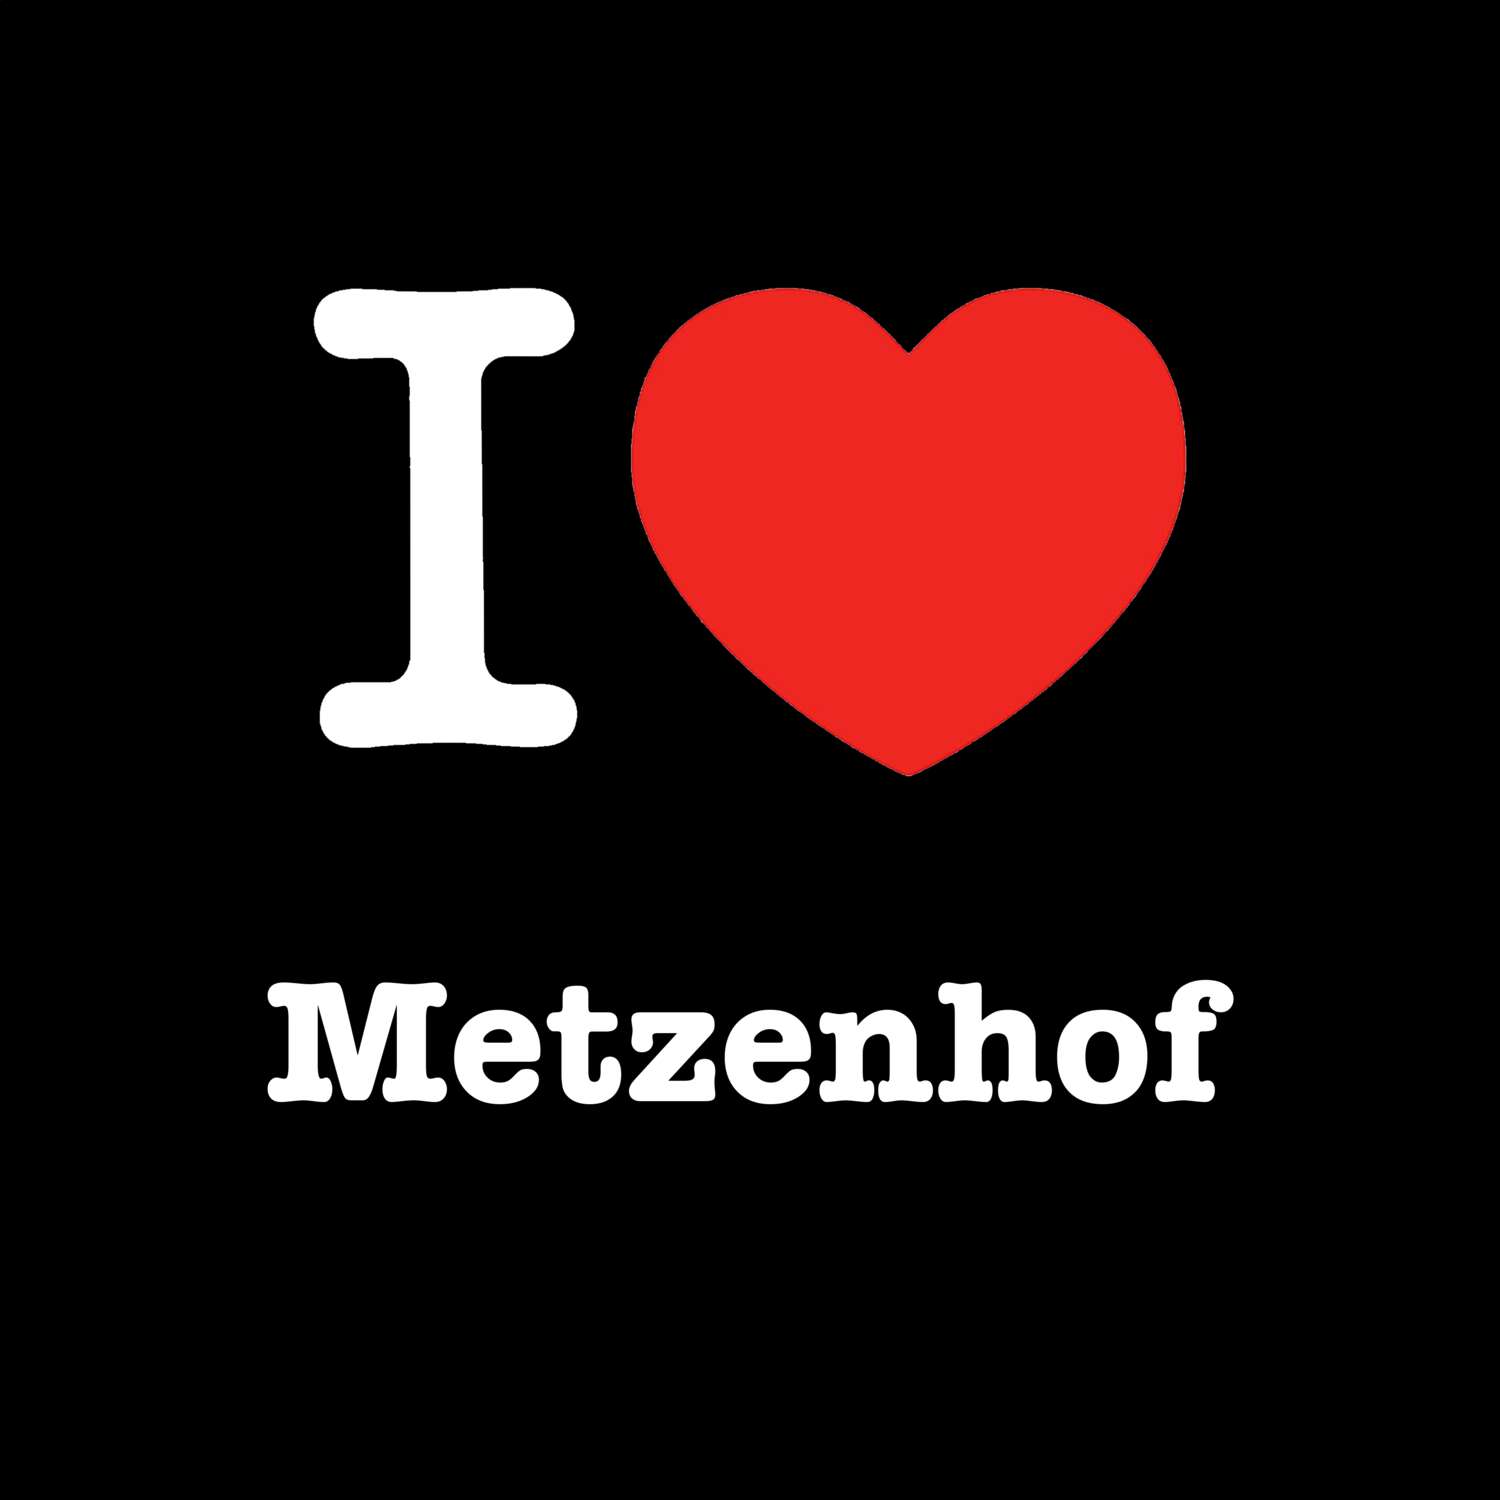 Metzenhof T-Shirt »I love«